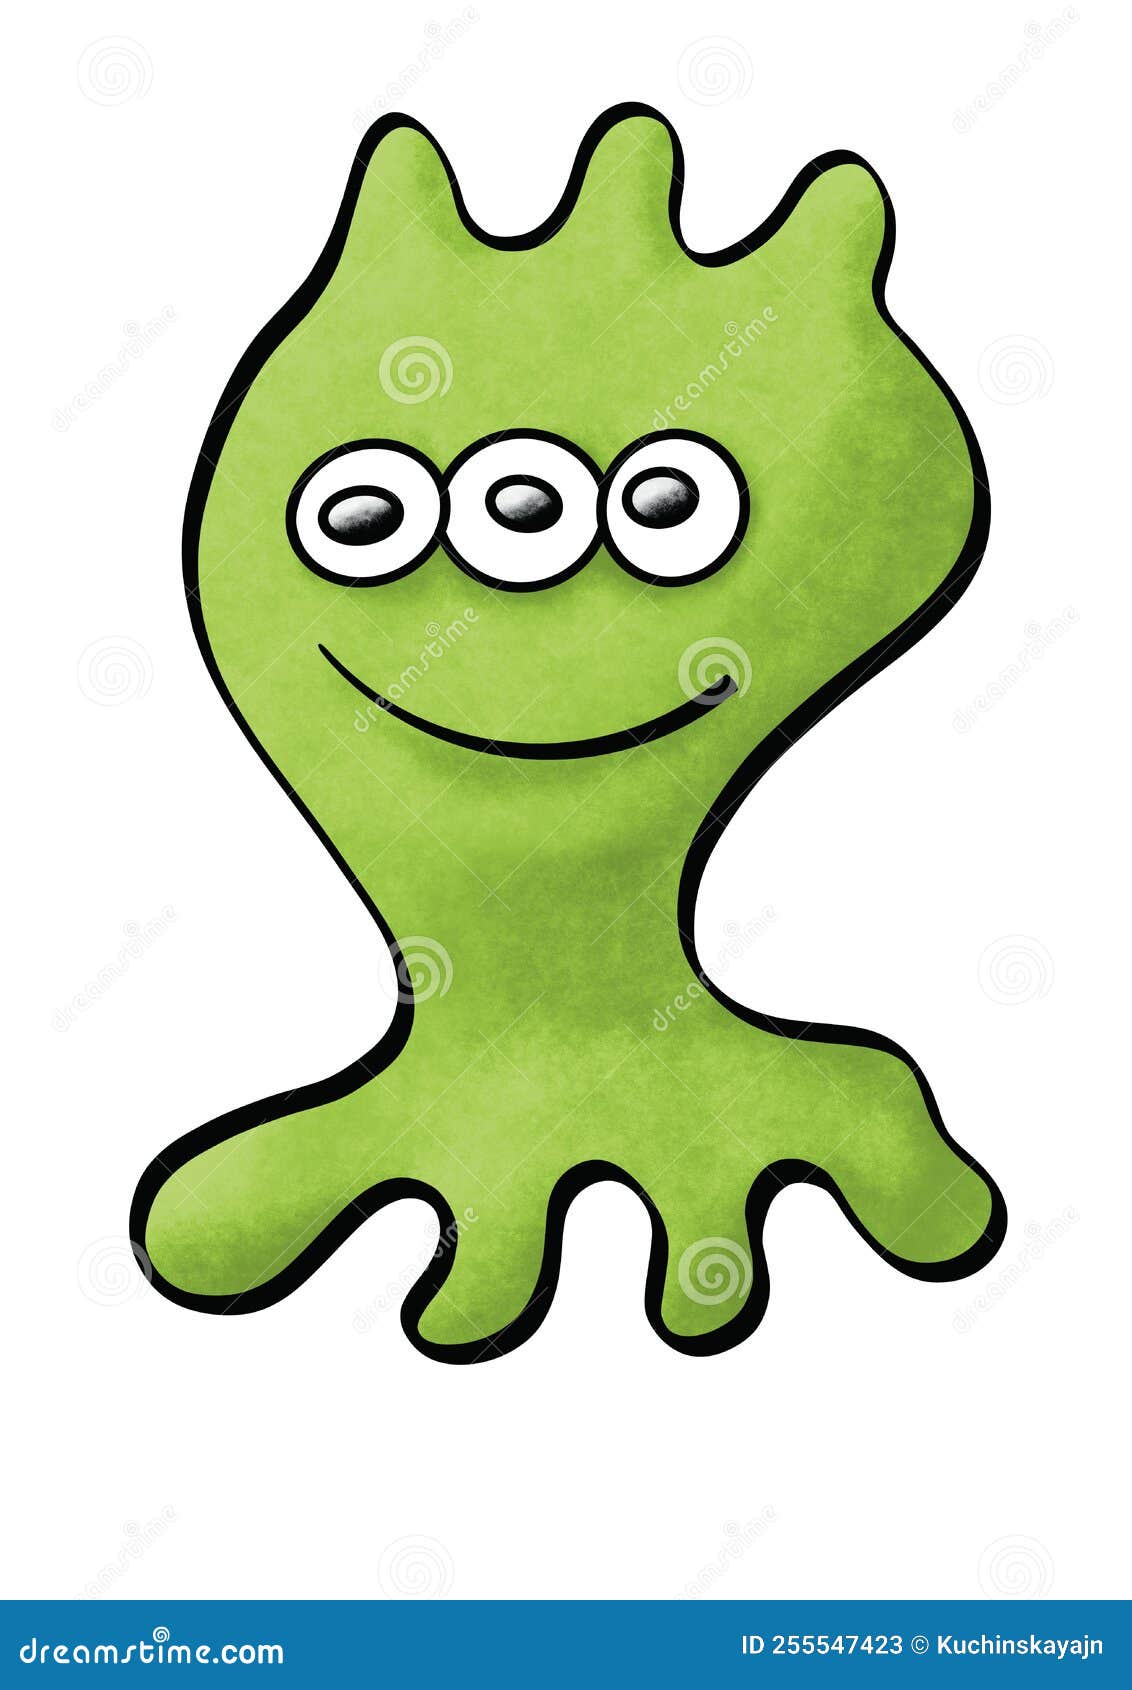 Desenho animado alienígena verde - Stockphoto #27653610